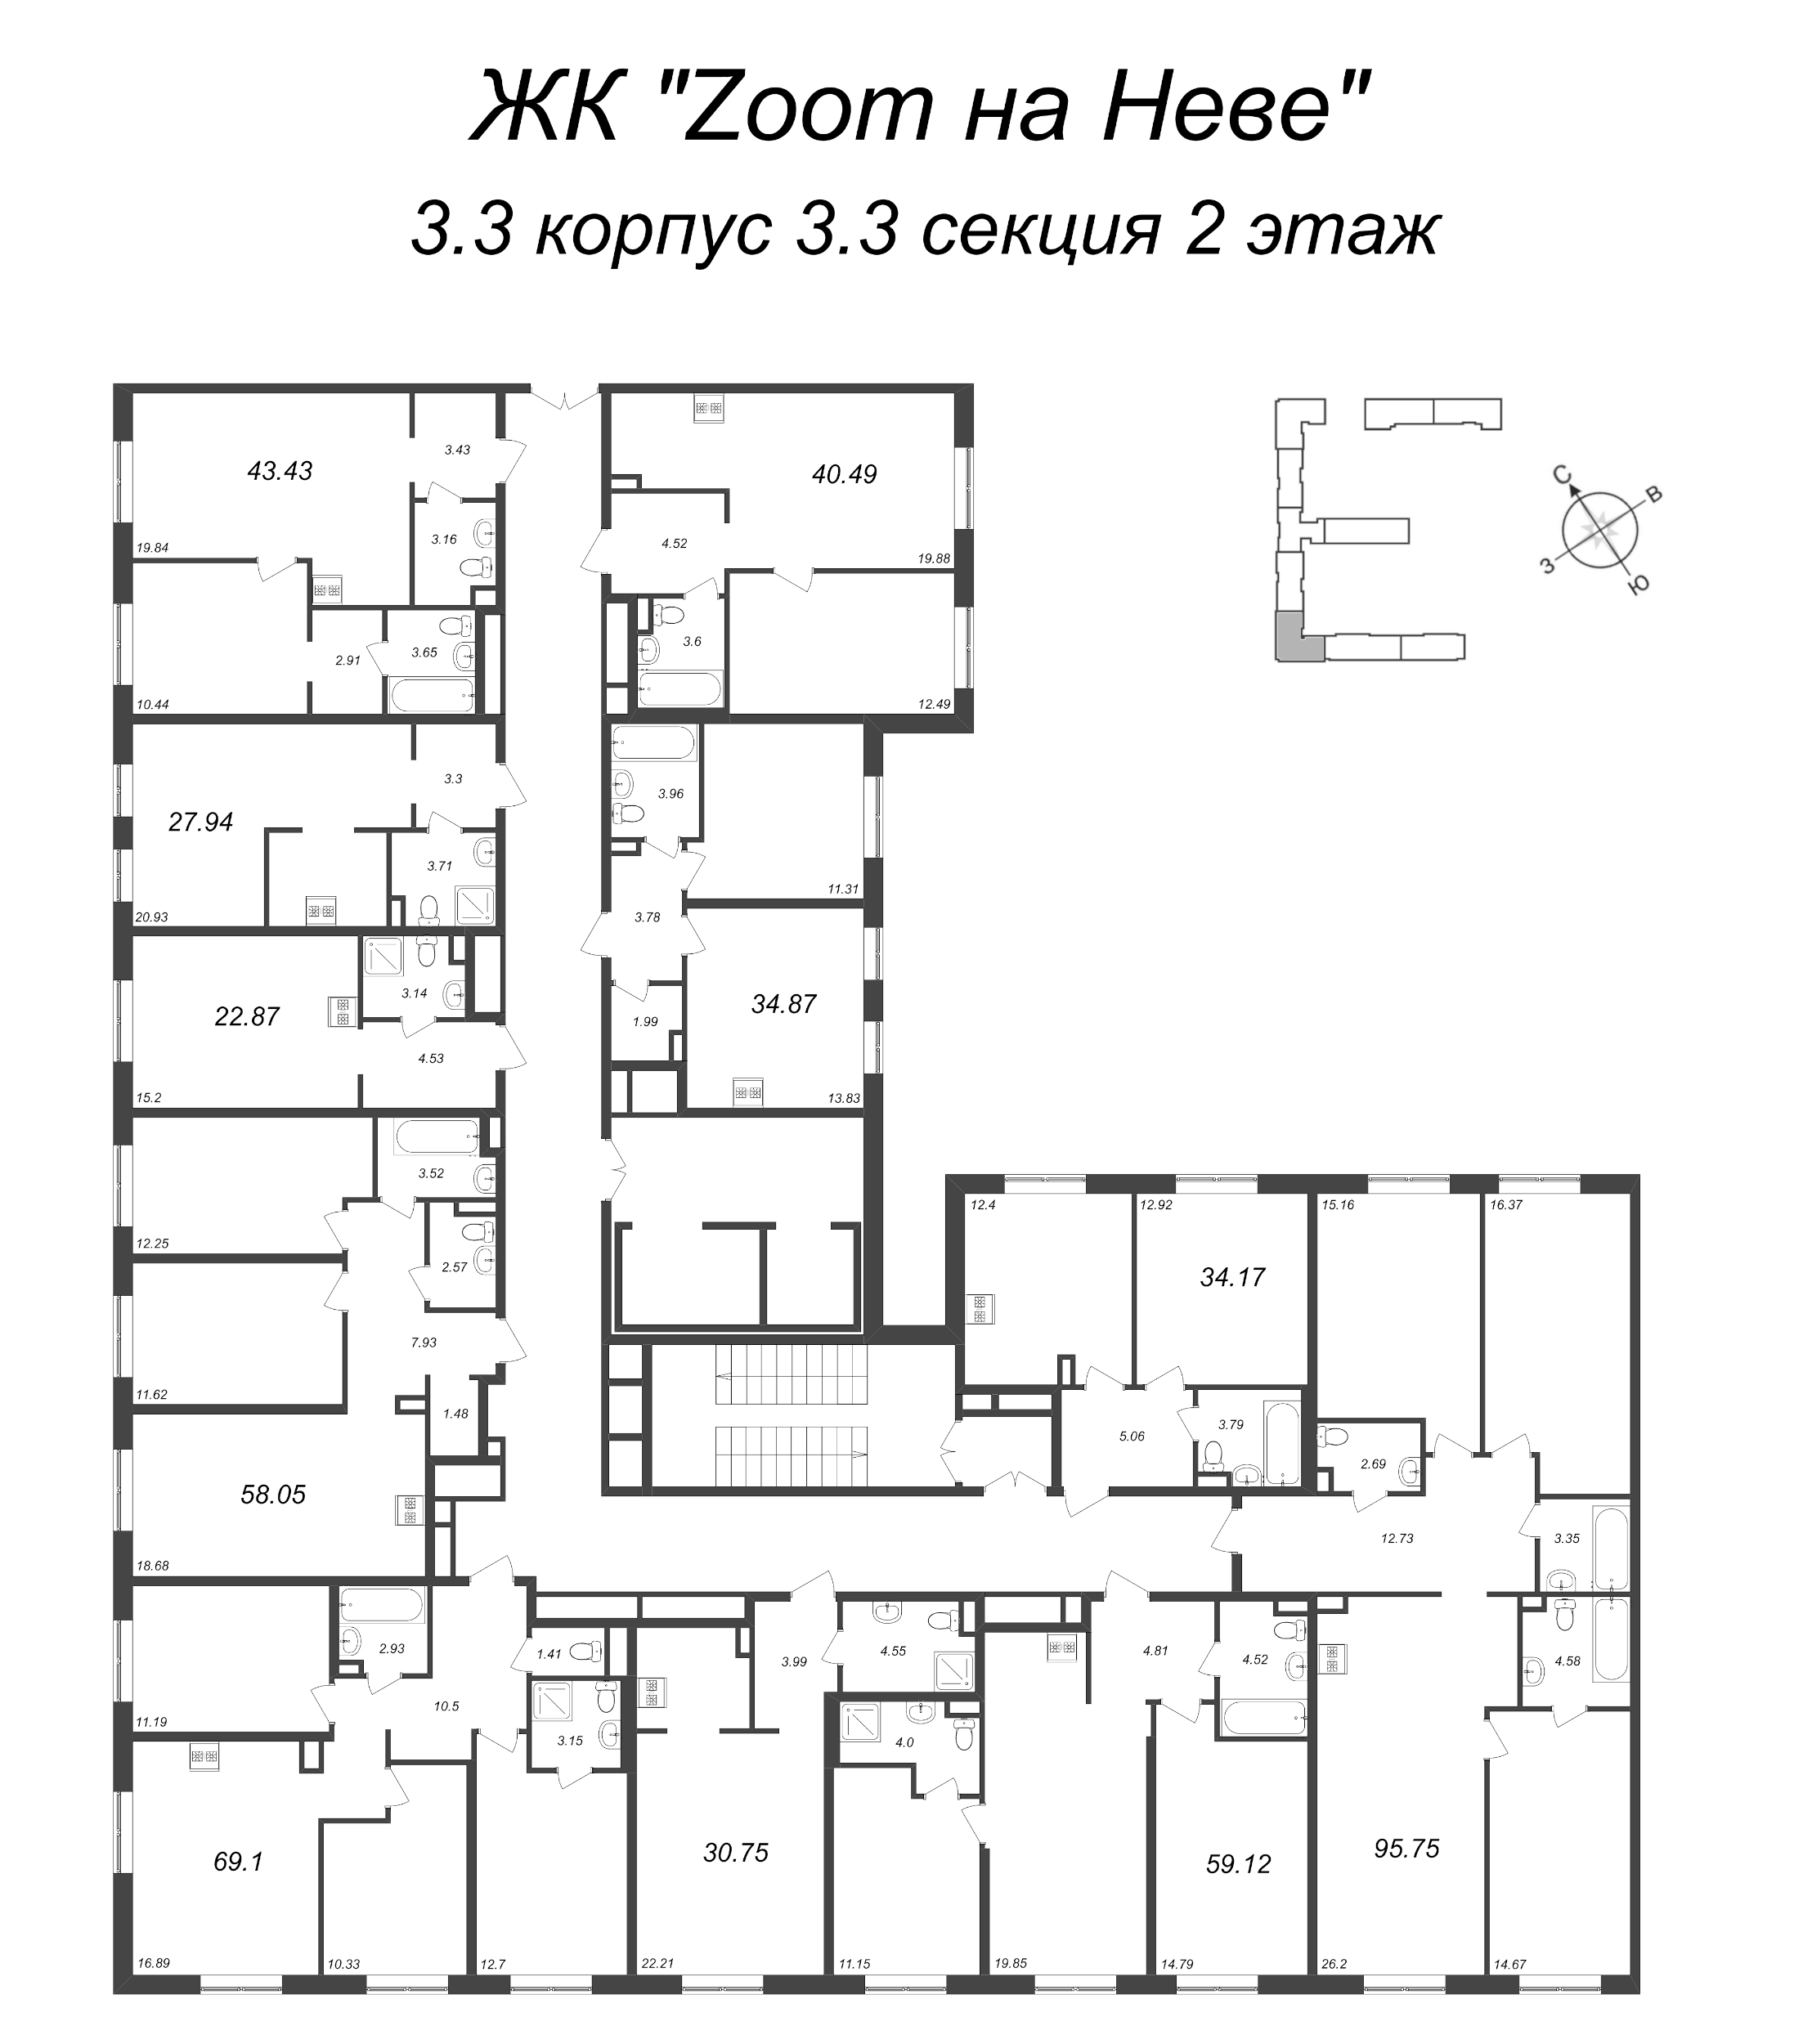 4-комнатная (Евро) квартира, 69.1 м² - планировка этажа